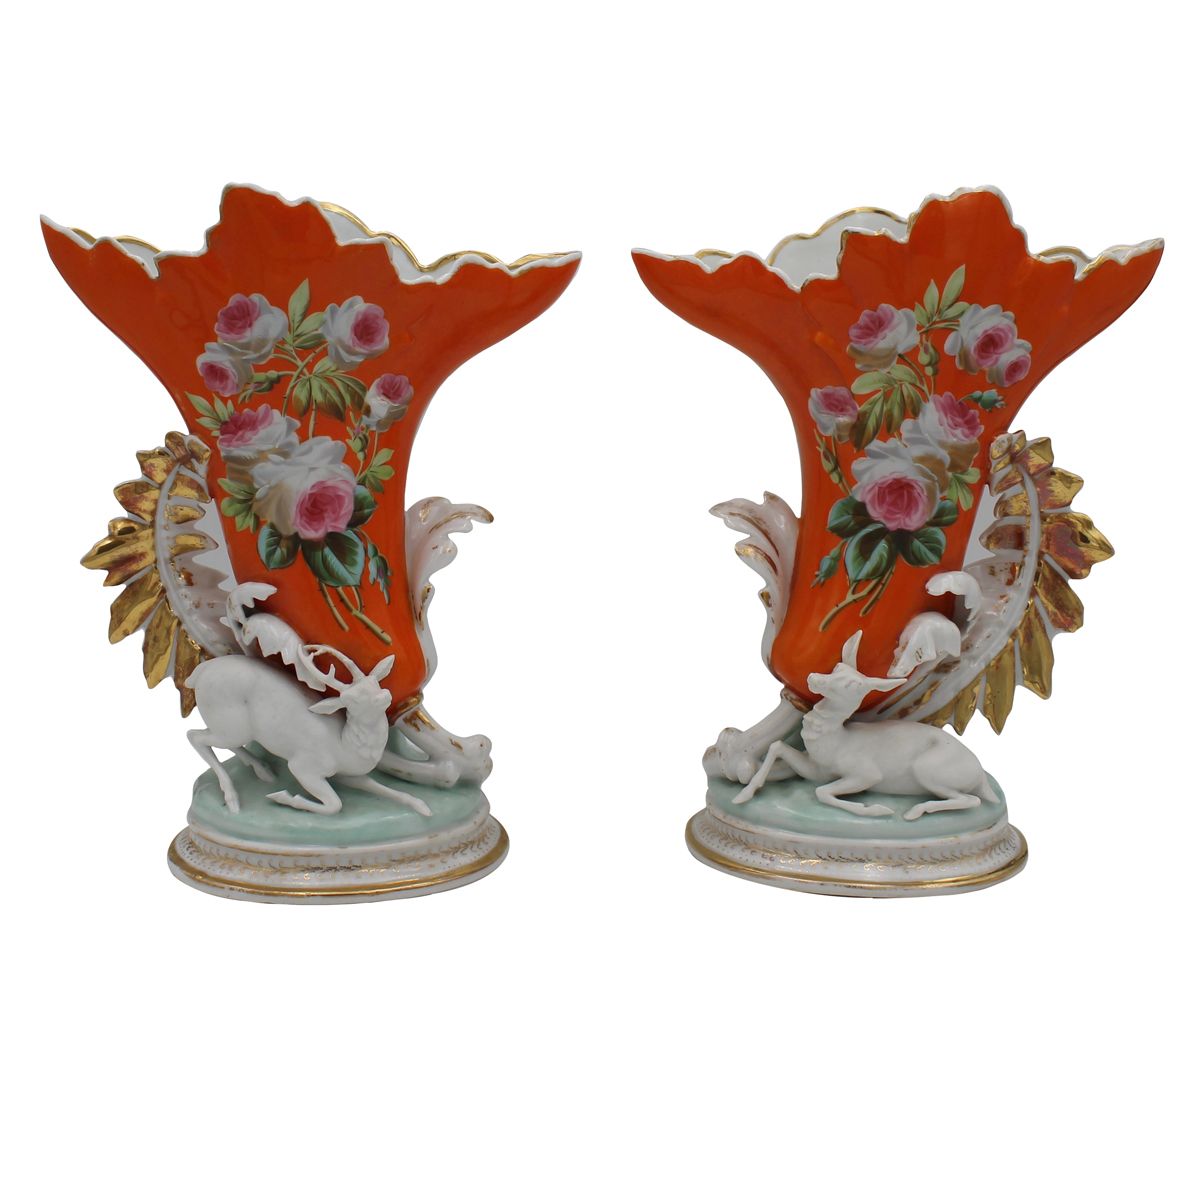 COPPIA DI VASI - PAIR OF VASES 古董瓷器，底部装饰有动物，橙色背景上有镀金的装饰图案。法国。19世纪晚期。Cm H 32
古代瓷器&hellip;